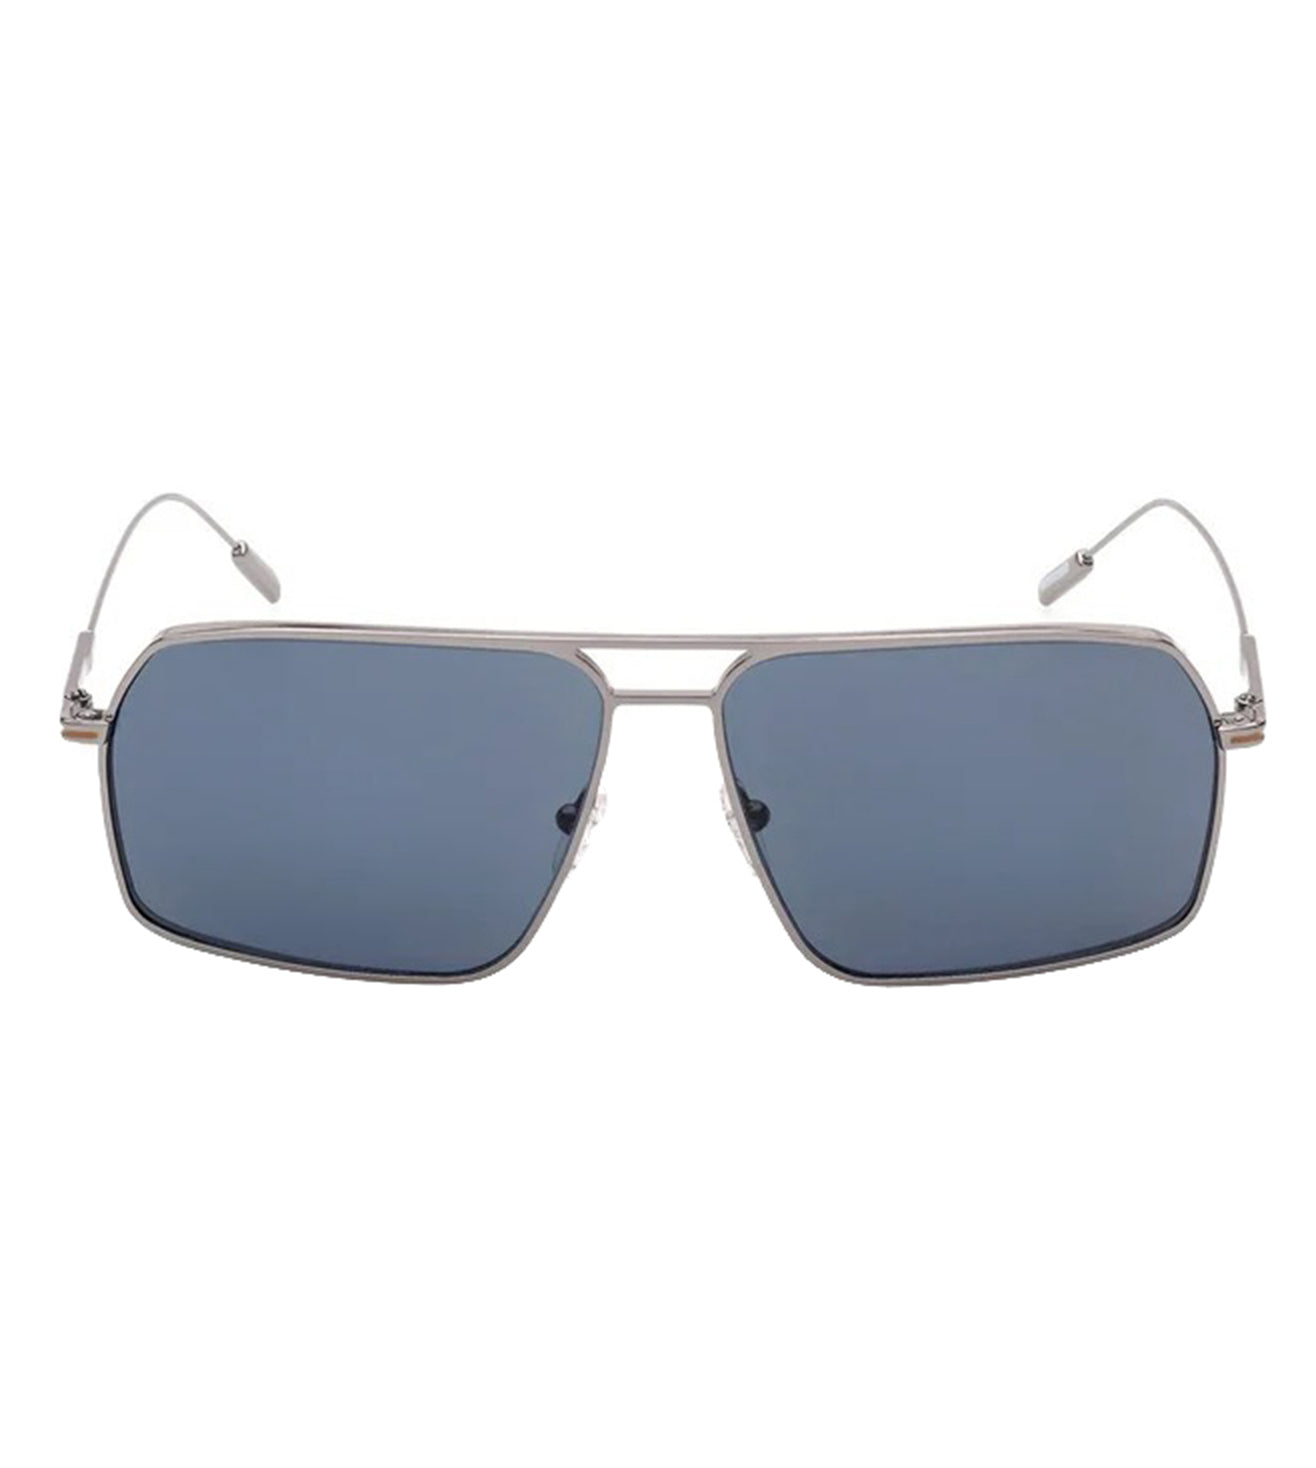 Zegna Men's Blue Aviator Sunglasses